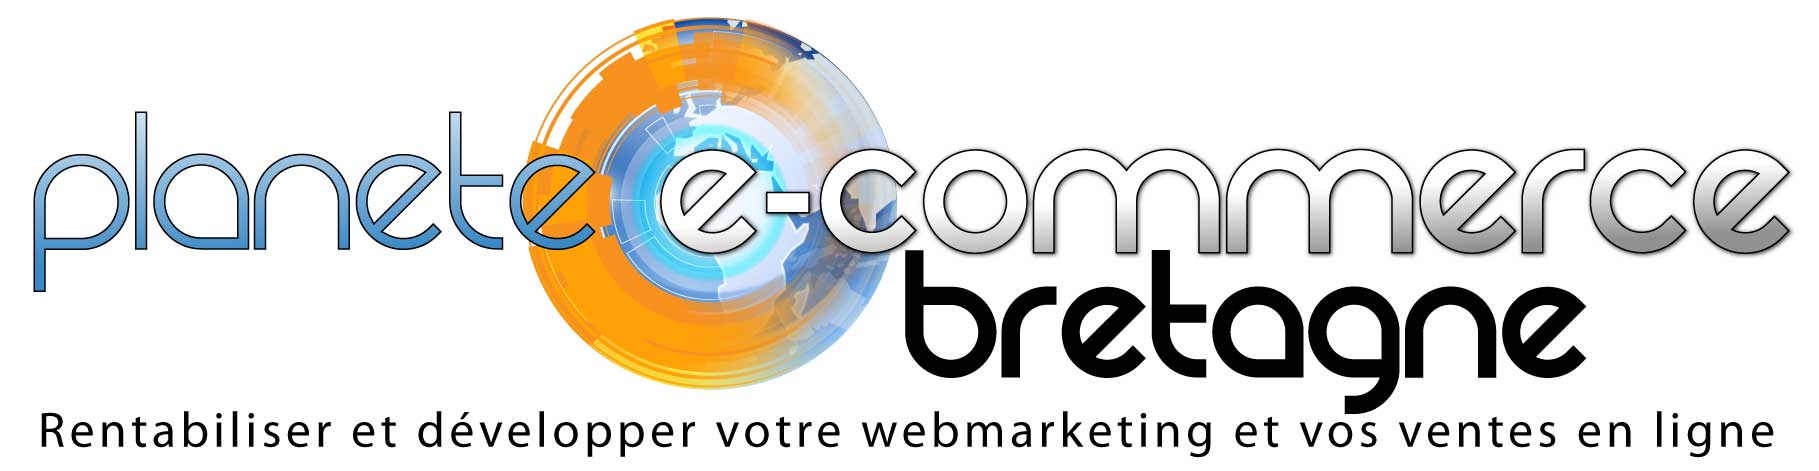 1er Planete e-commerce Bretagne